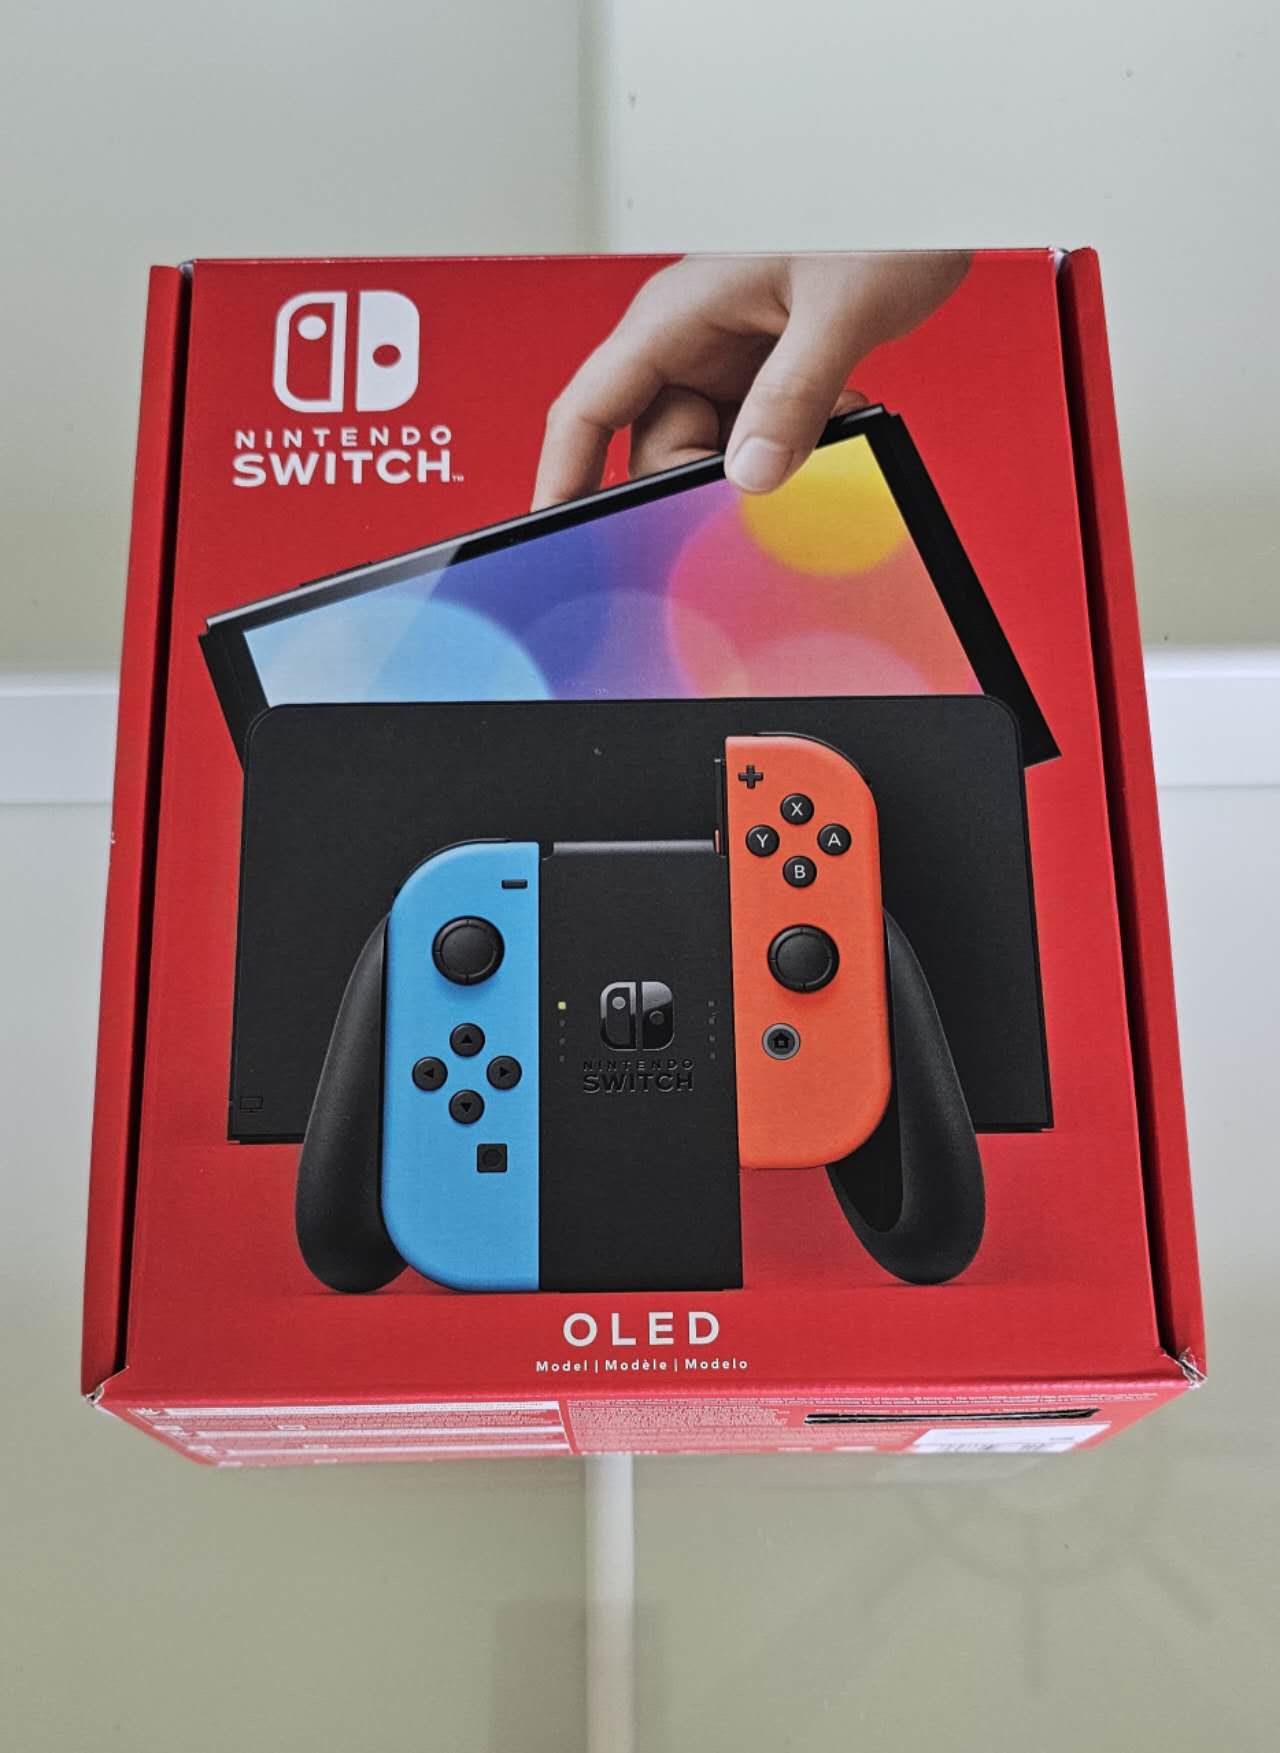 Nintendo Switch OLED (Brand New)